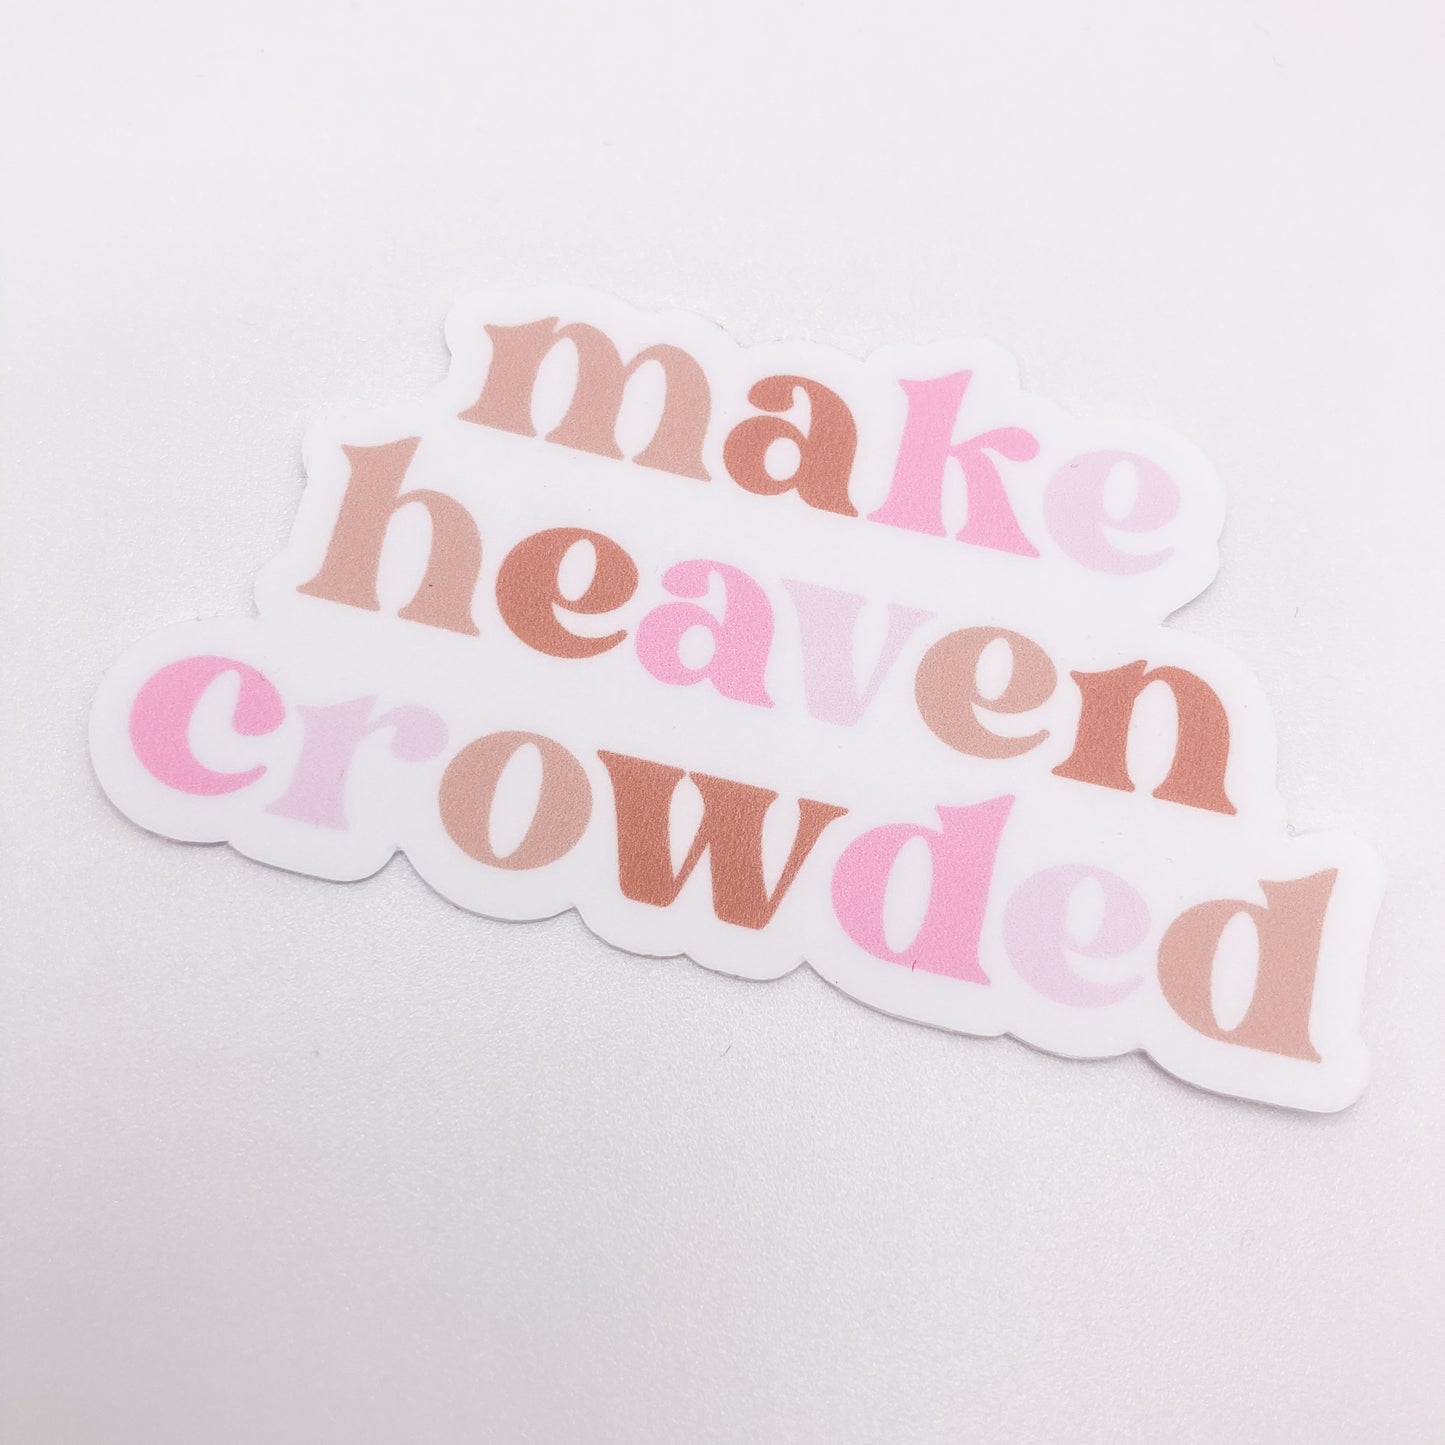 Make Heaven Crowded Sticker